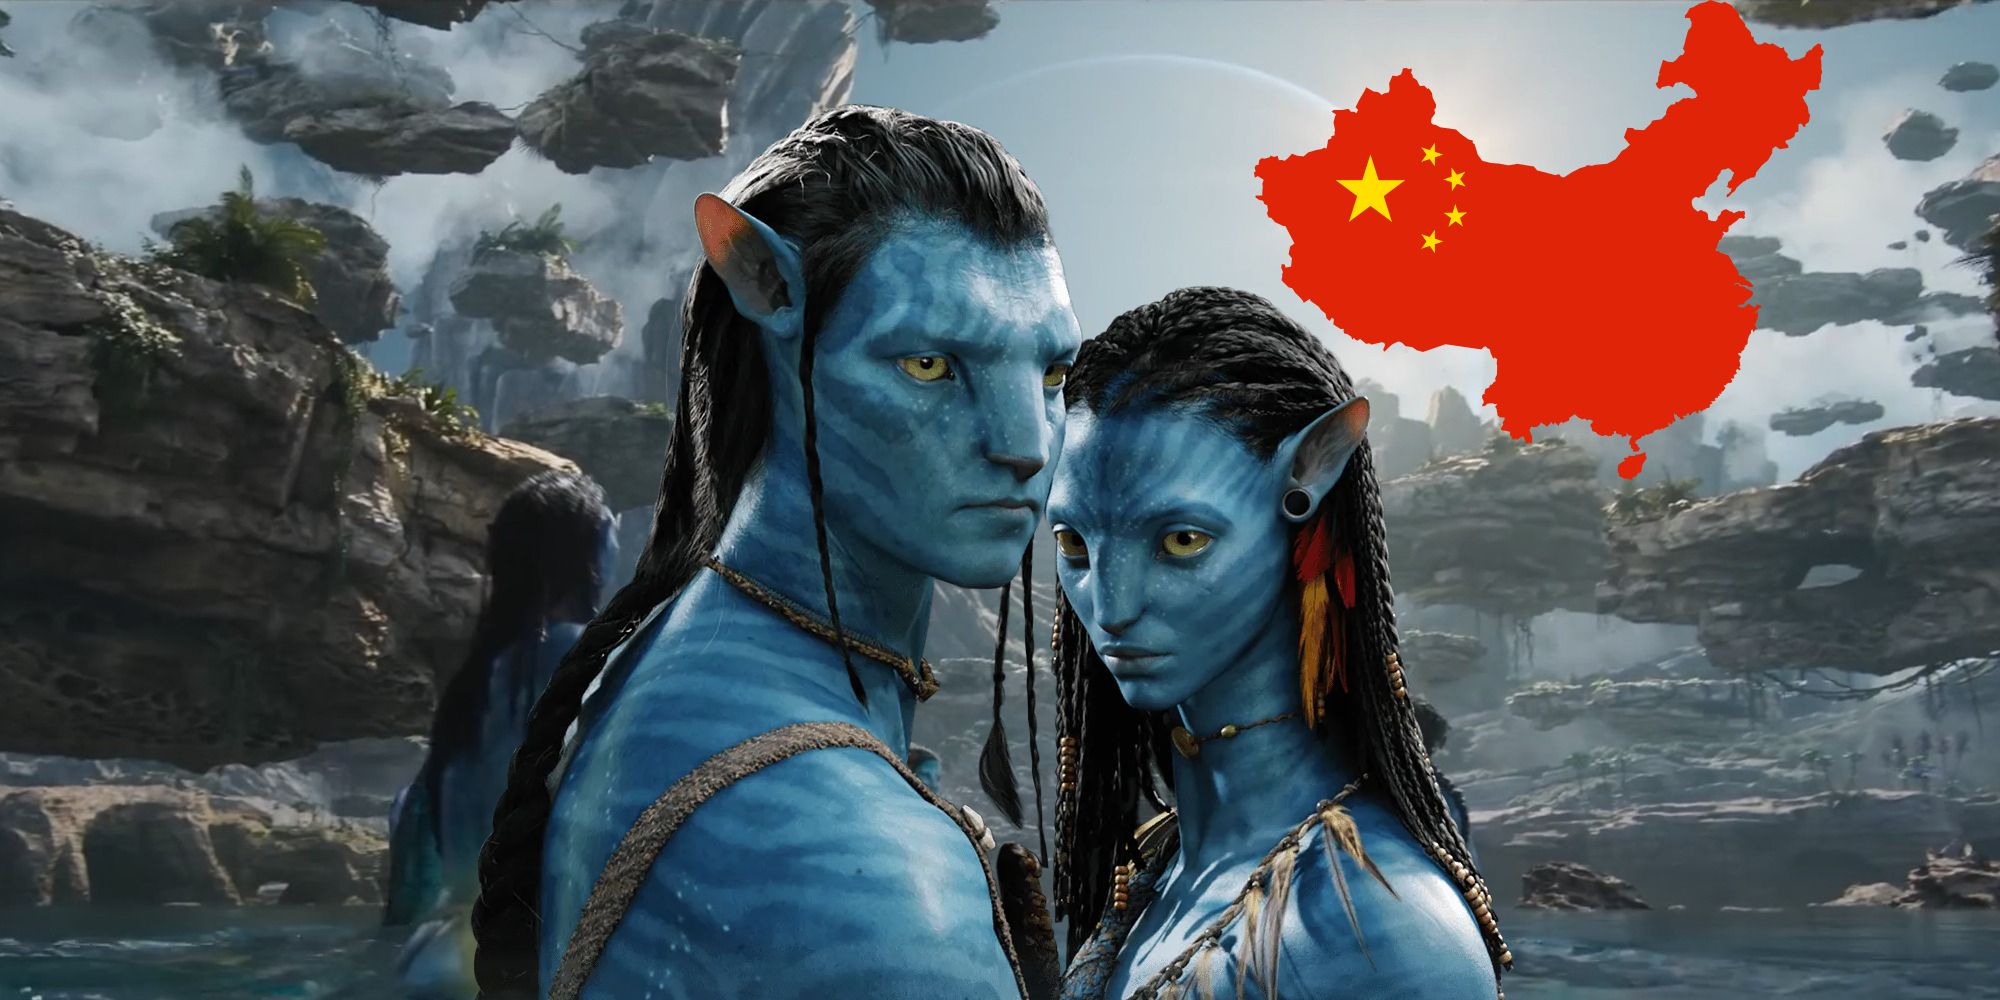 Avatar The Way of Water with China map Jake Sully Neytiri